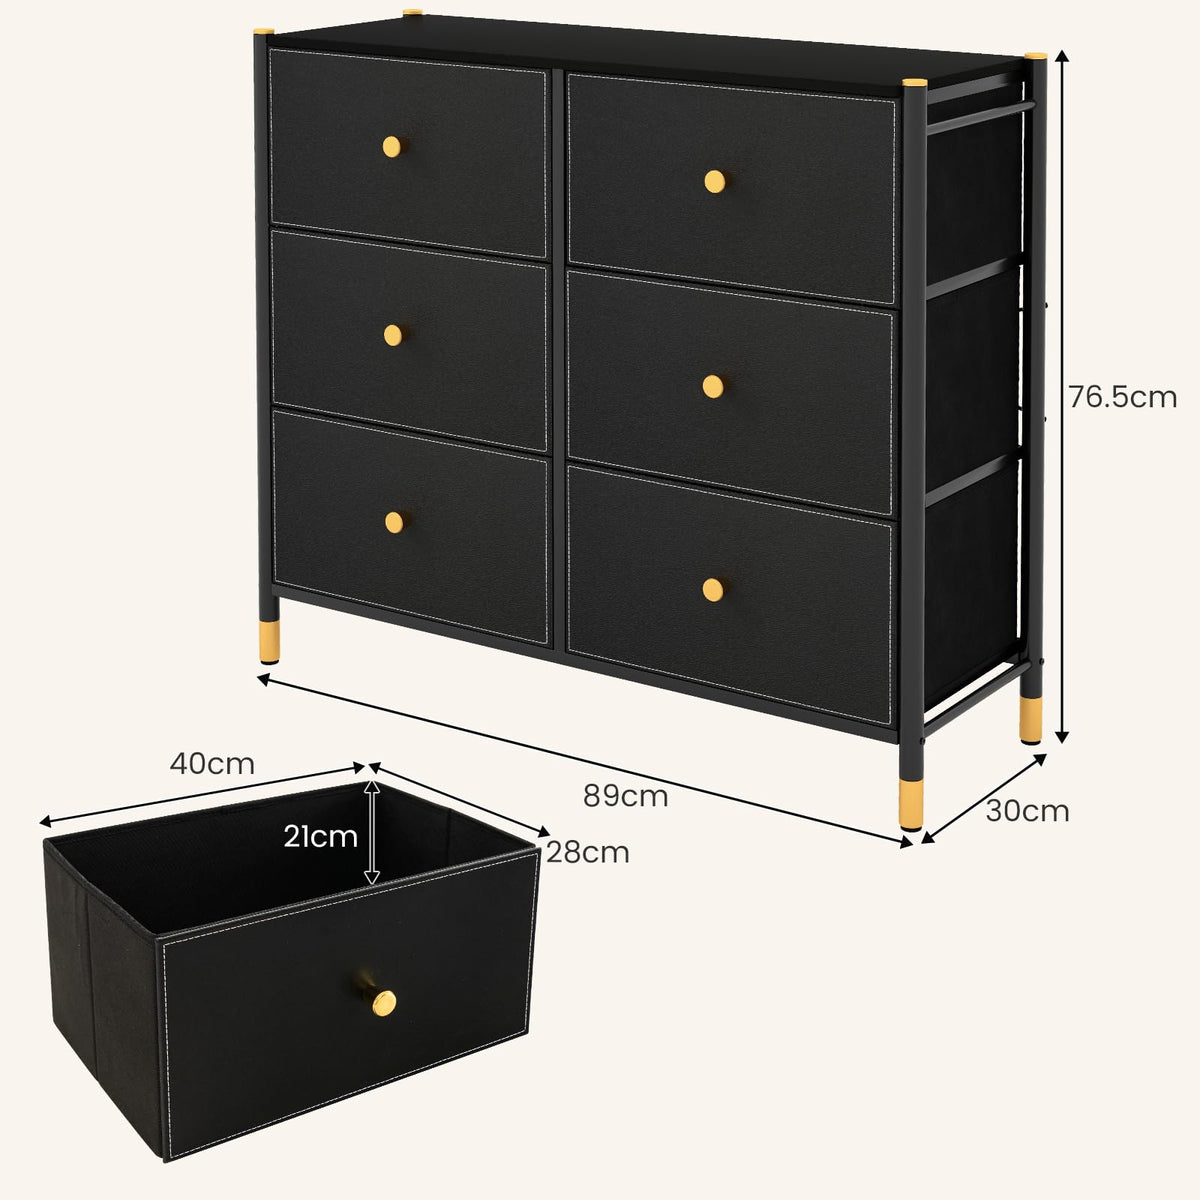 Giantex Dresser with 5 Drawers, Fabric Dresser Tower